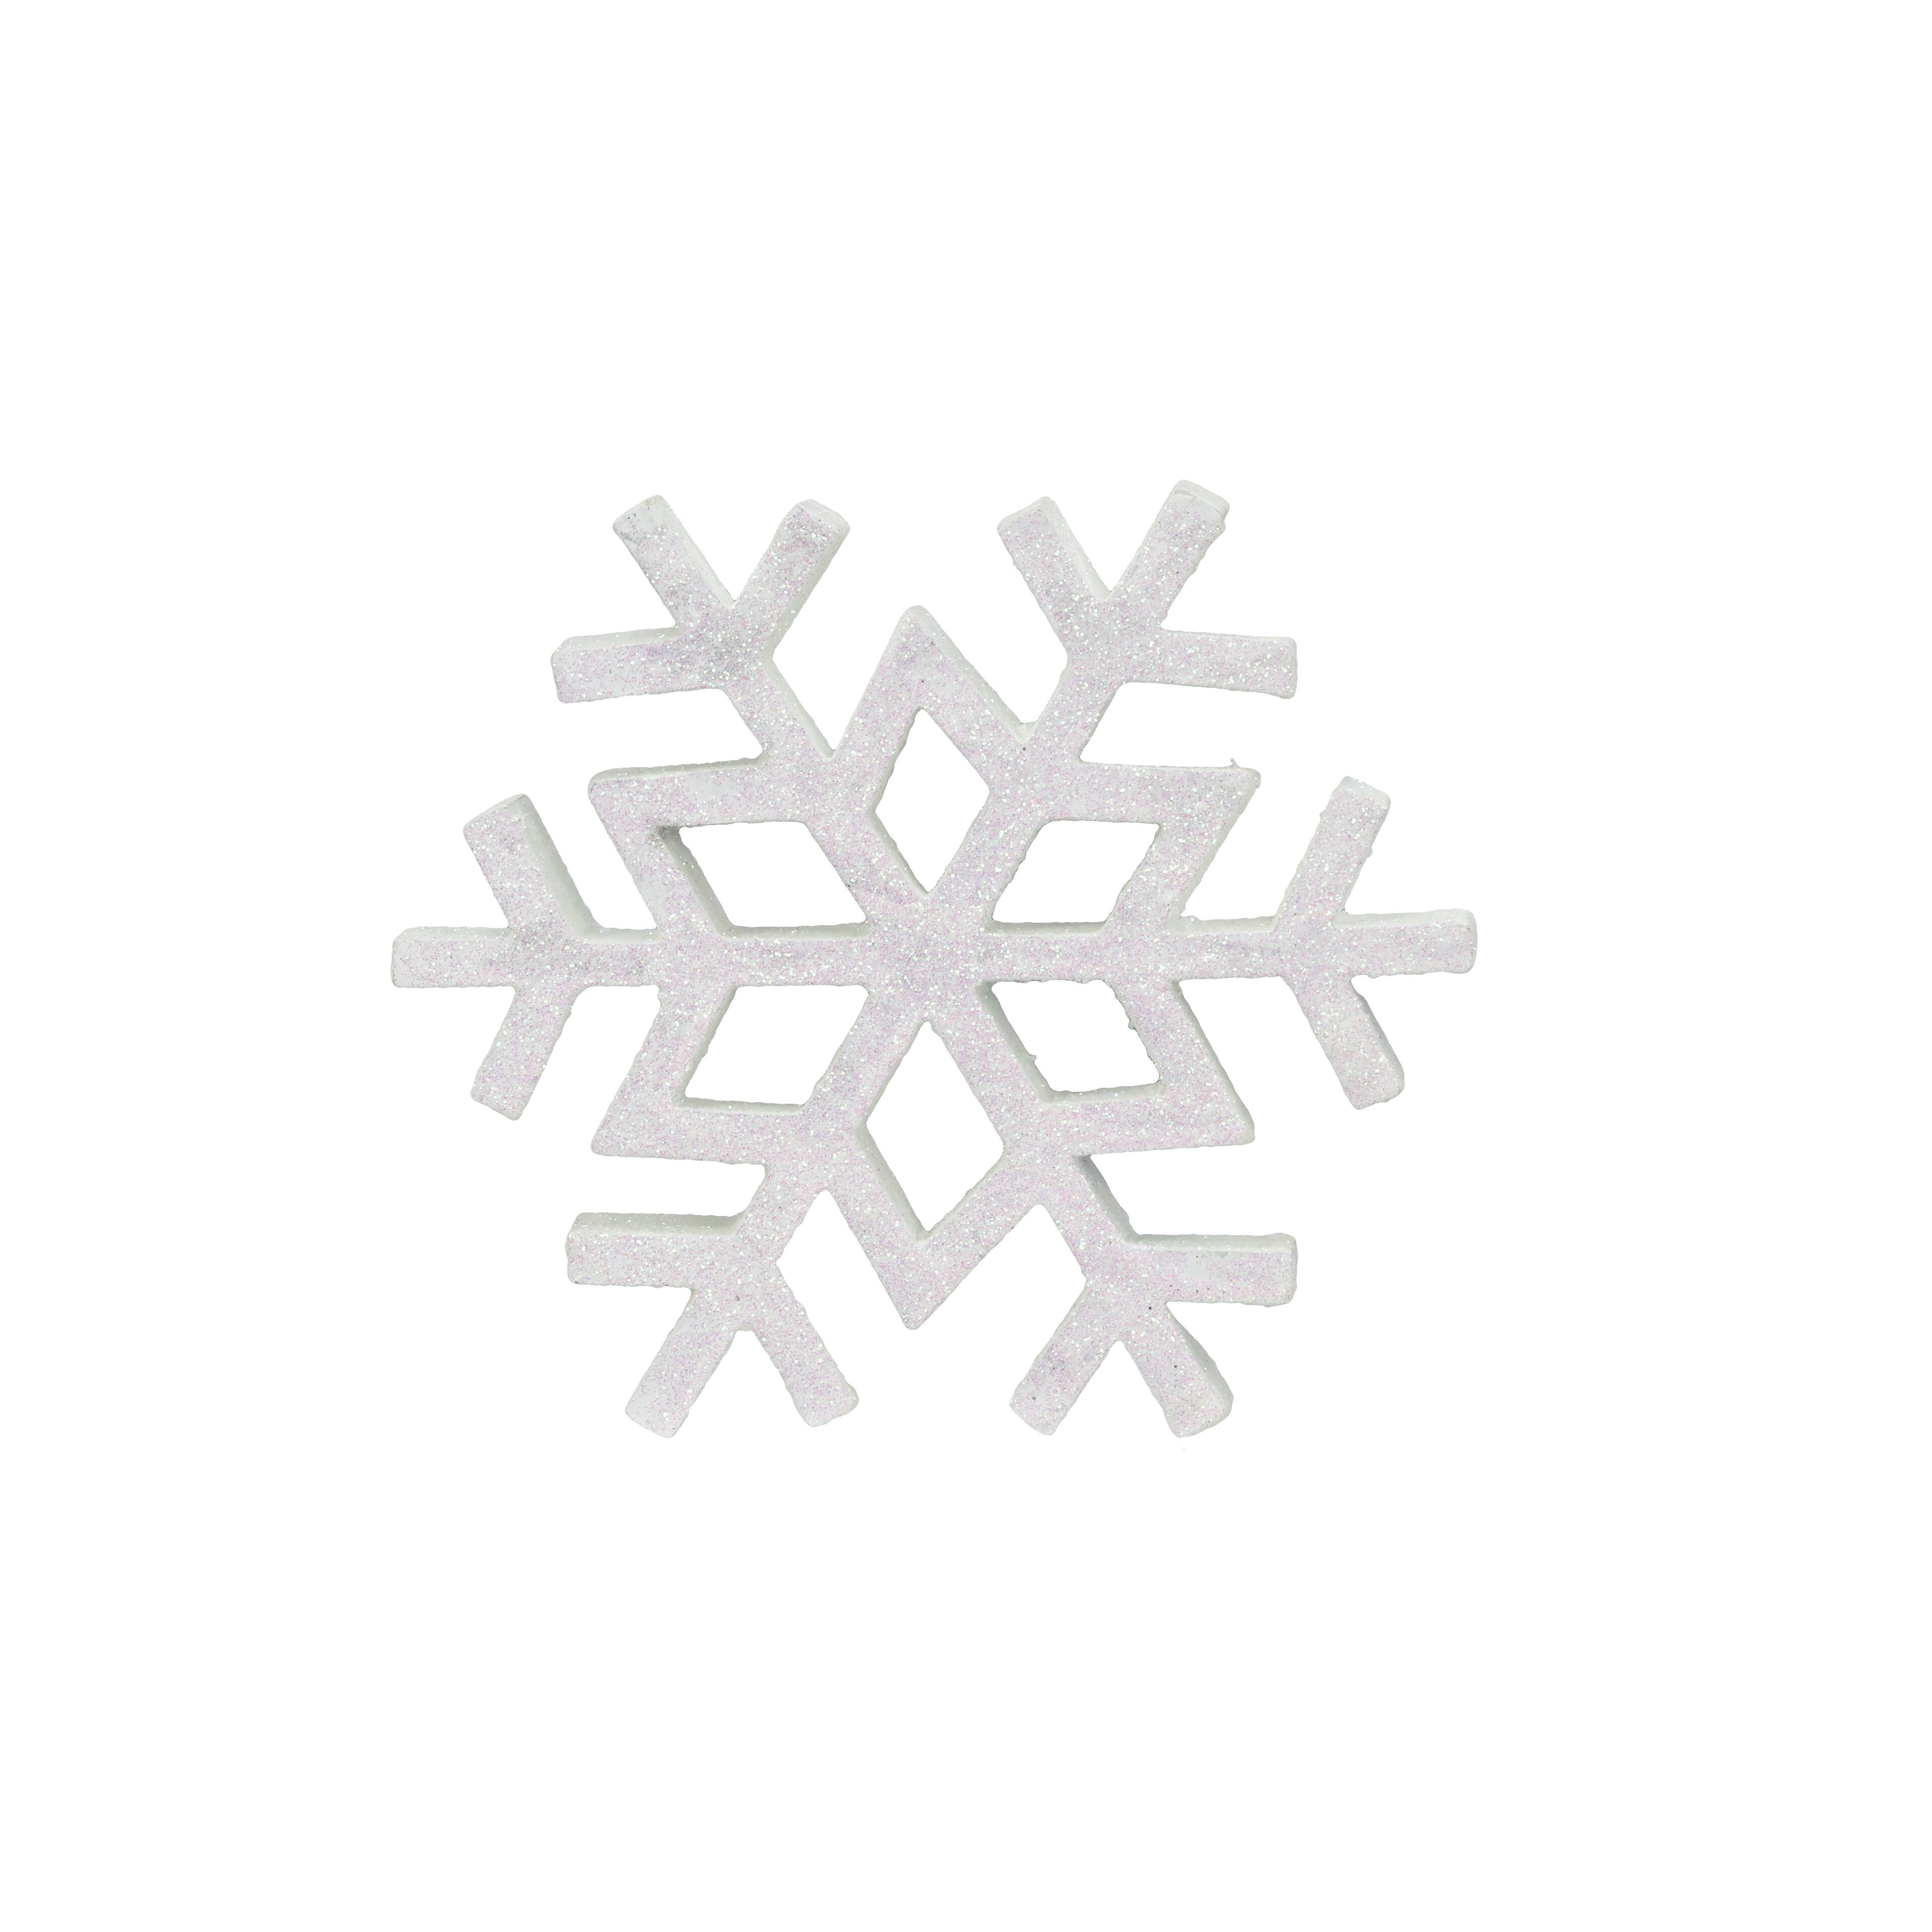 Mini White Decorative Snowflakes by Ashland®, 12ct.